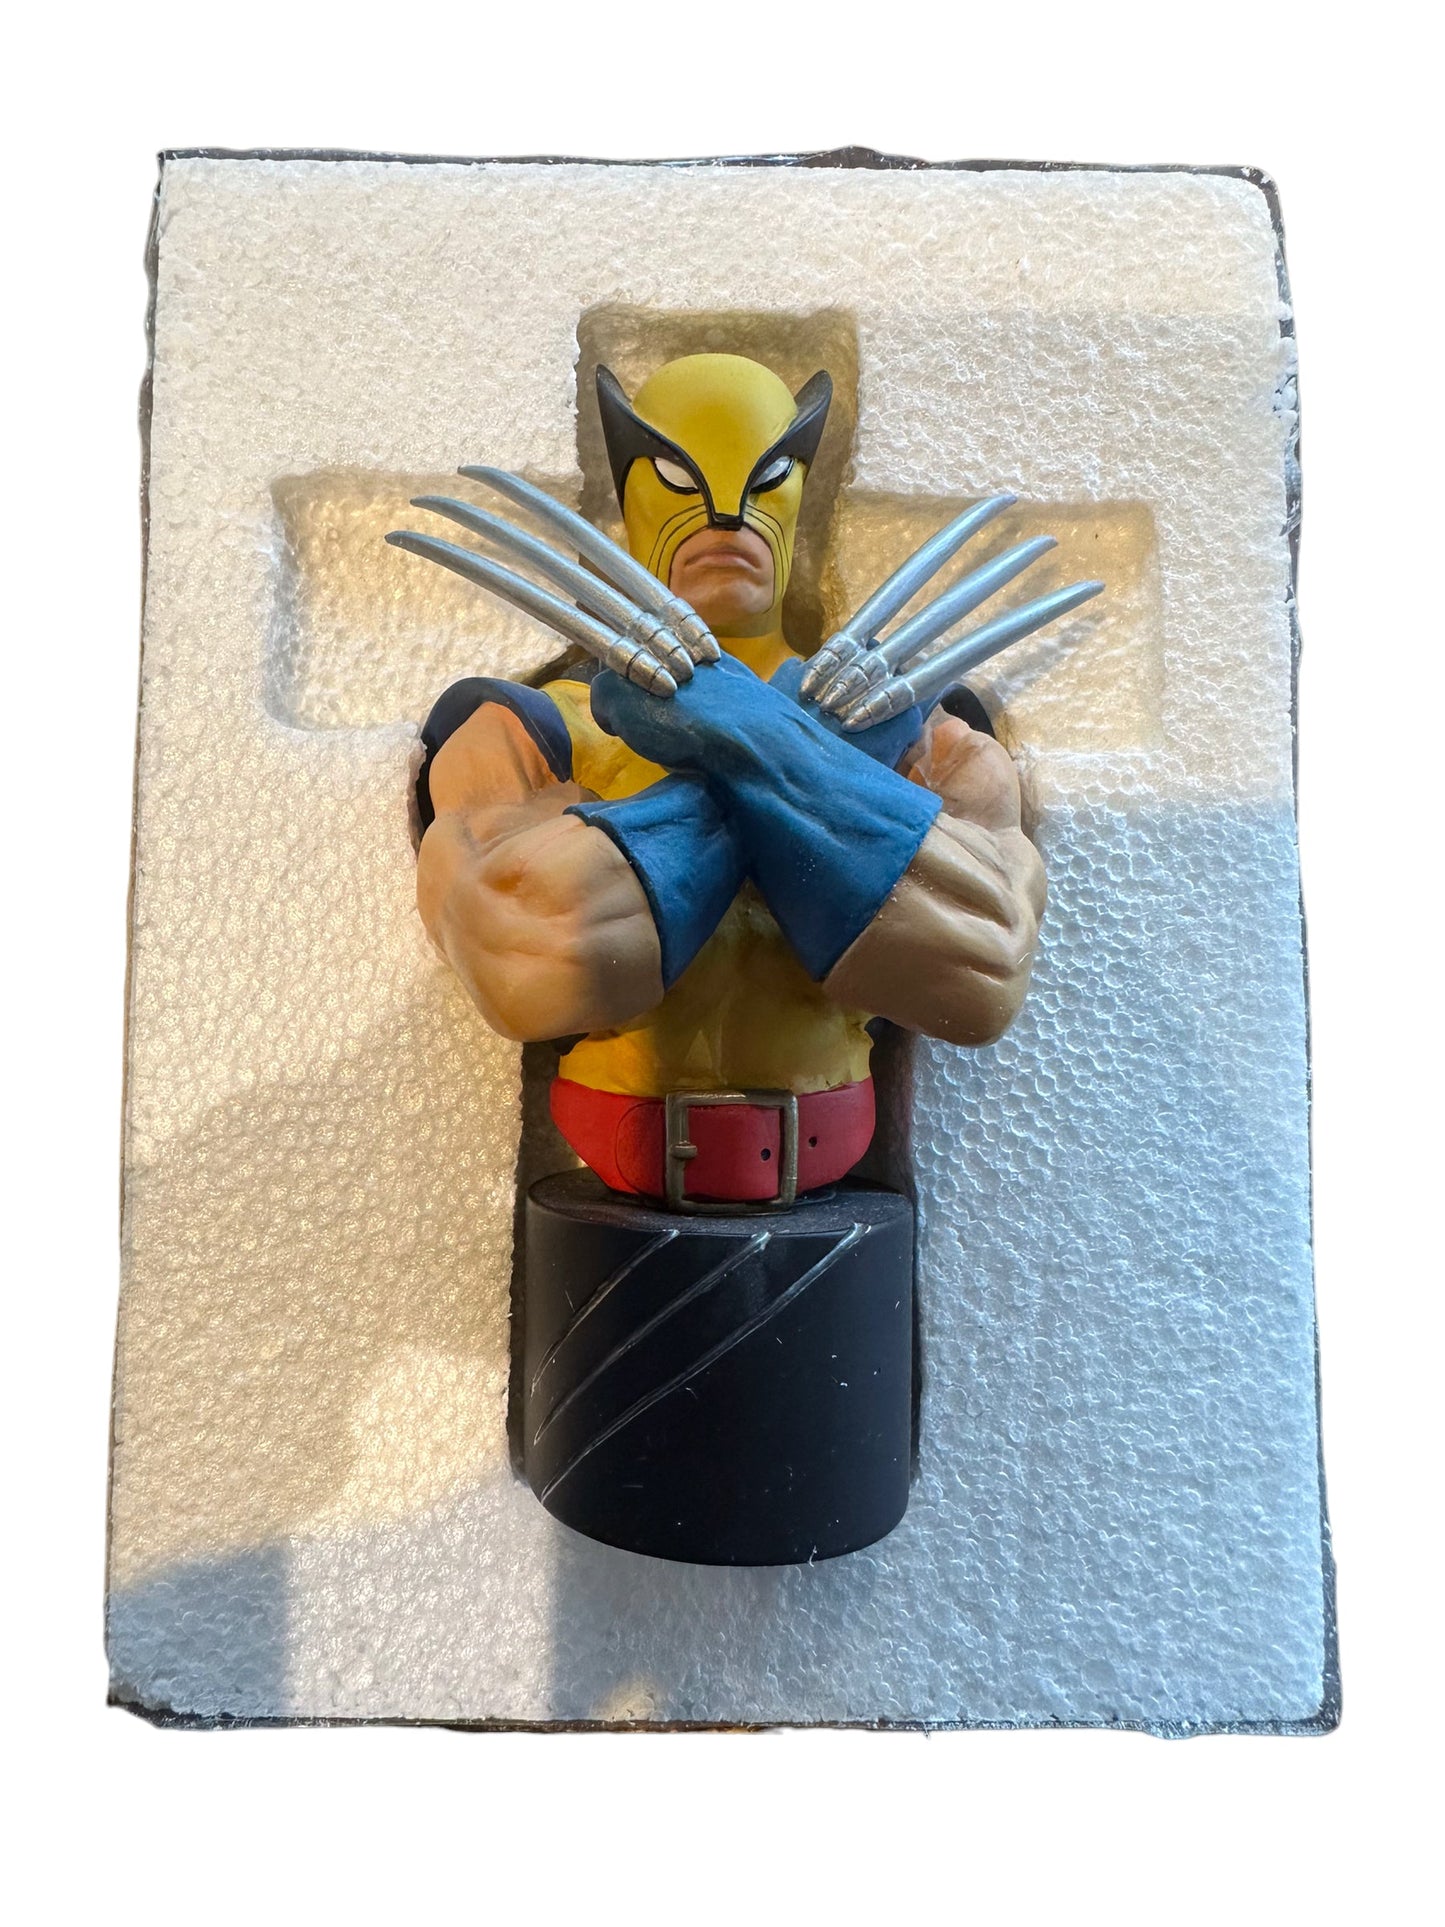 Wolverine Mini Bust Statue - Bowen Designs 25th Anniversary Edition 5331/ 7000